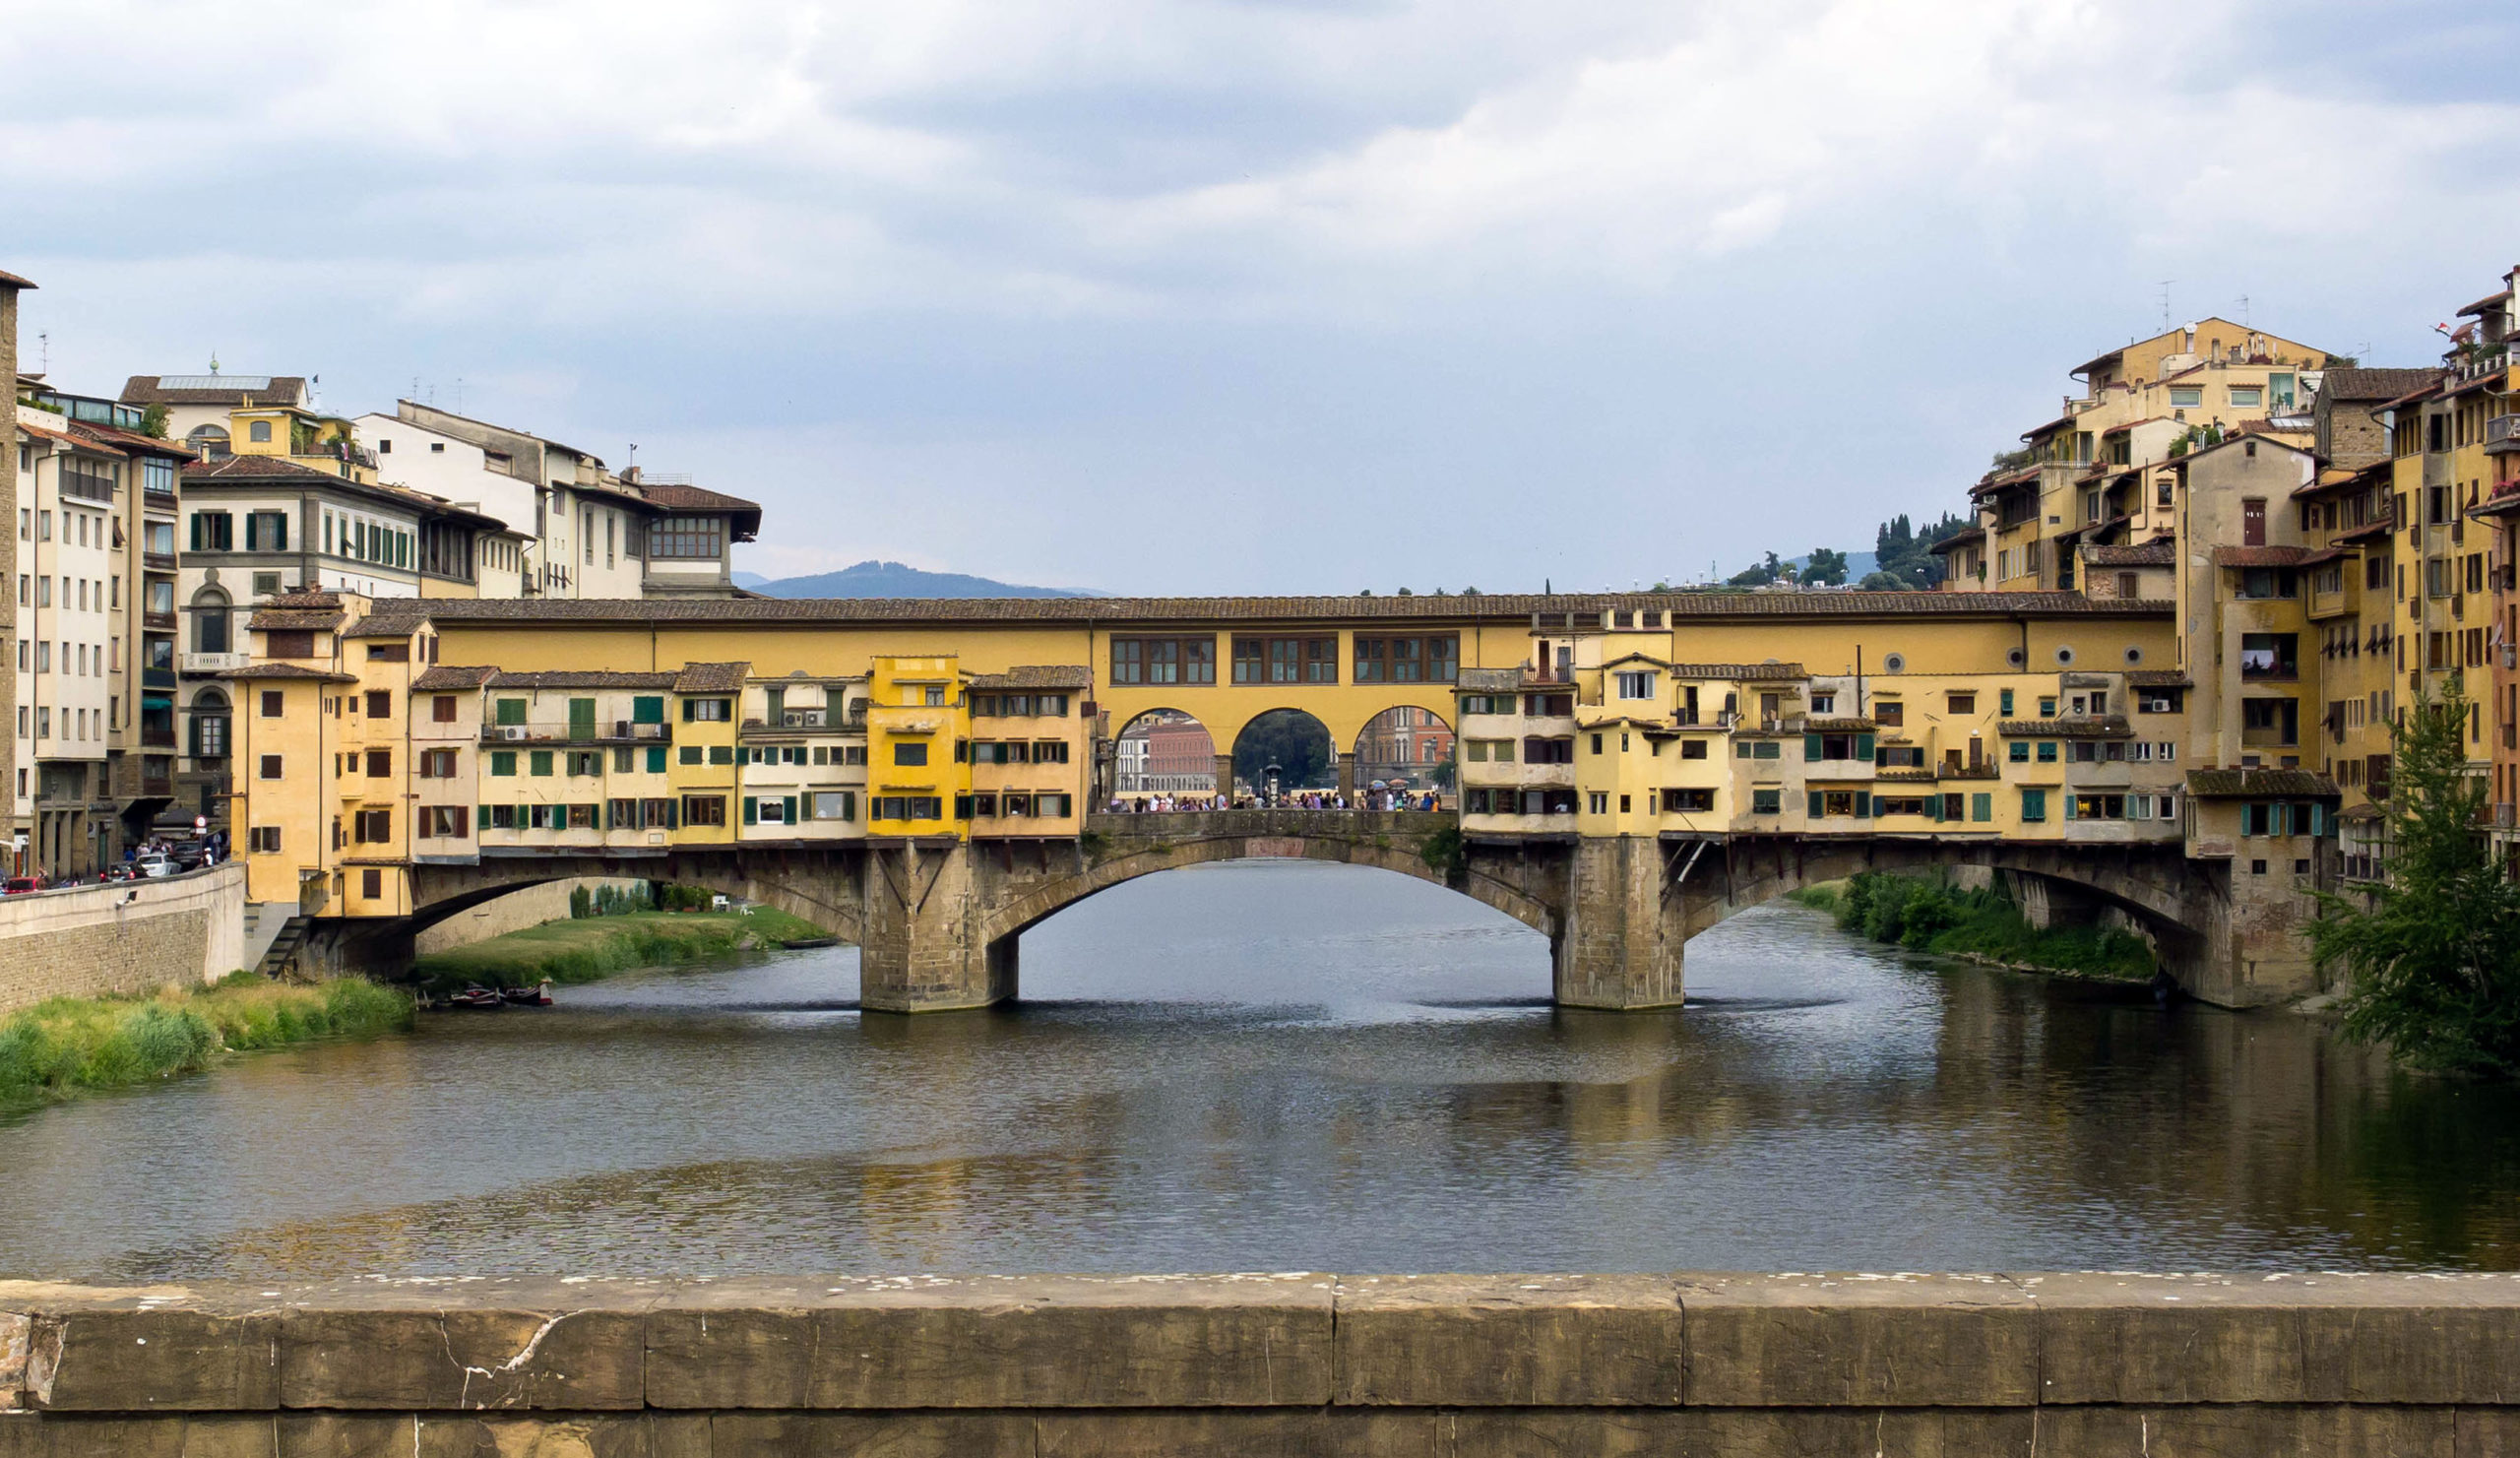 The Ponte Vecchio (“Old Bridge”) in Florence